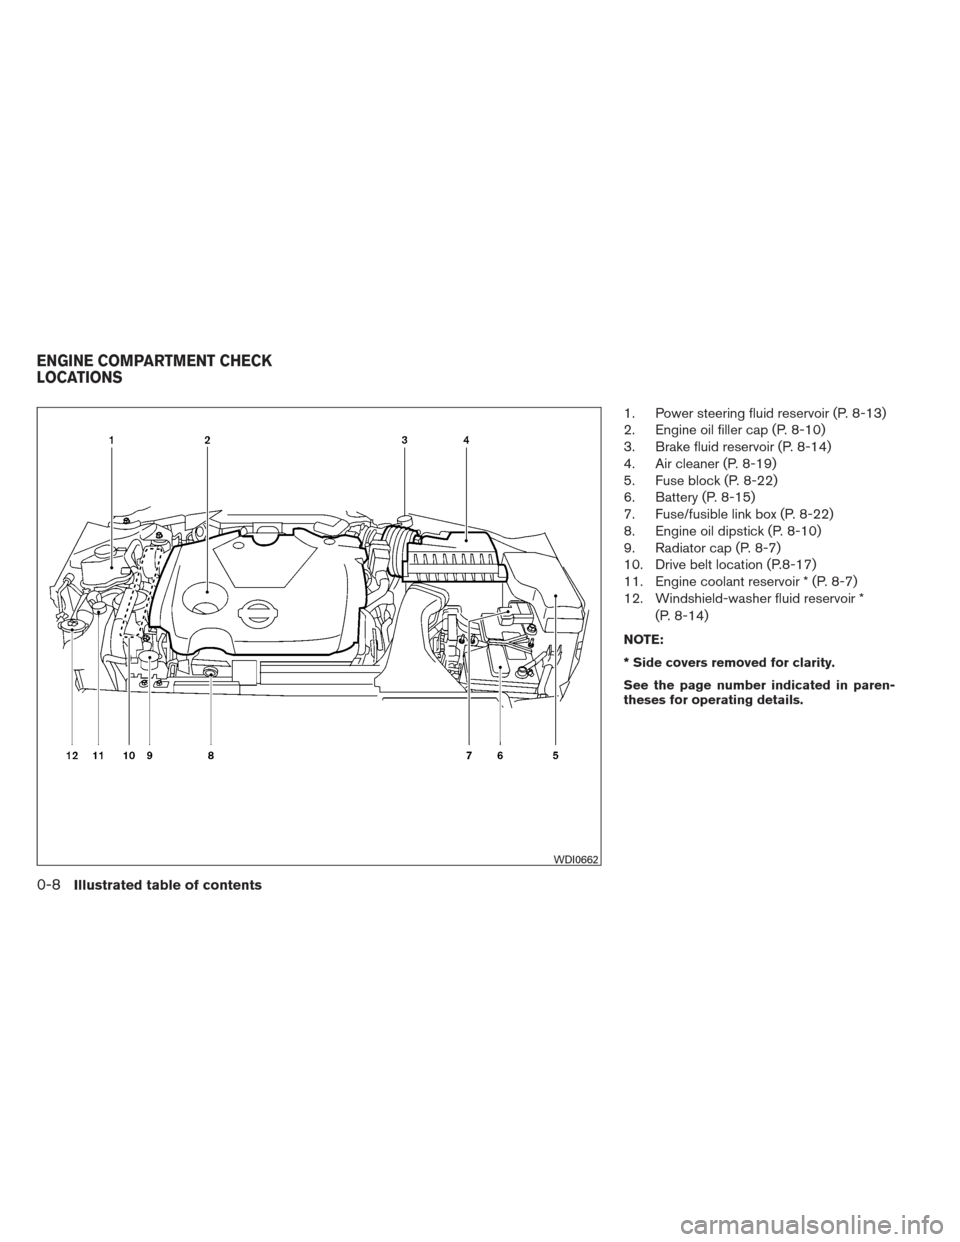 NISSAN MAXIMA 2013 A35 / 7.G Owners Manual 1. Power steering fluid reservoir (P. 8-13)
2. Engine oil filler cap (P. 8-10)
3. Brake fluid reservoir (P. 8-14)
4. Air cleaner (P. 8-19)
5. Fuse block (P. 8-22)
6. Battery (P. 8-15)
7. Fuse/fusible 